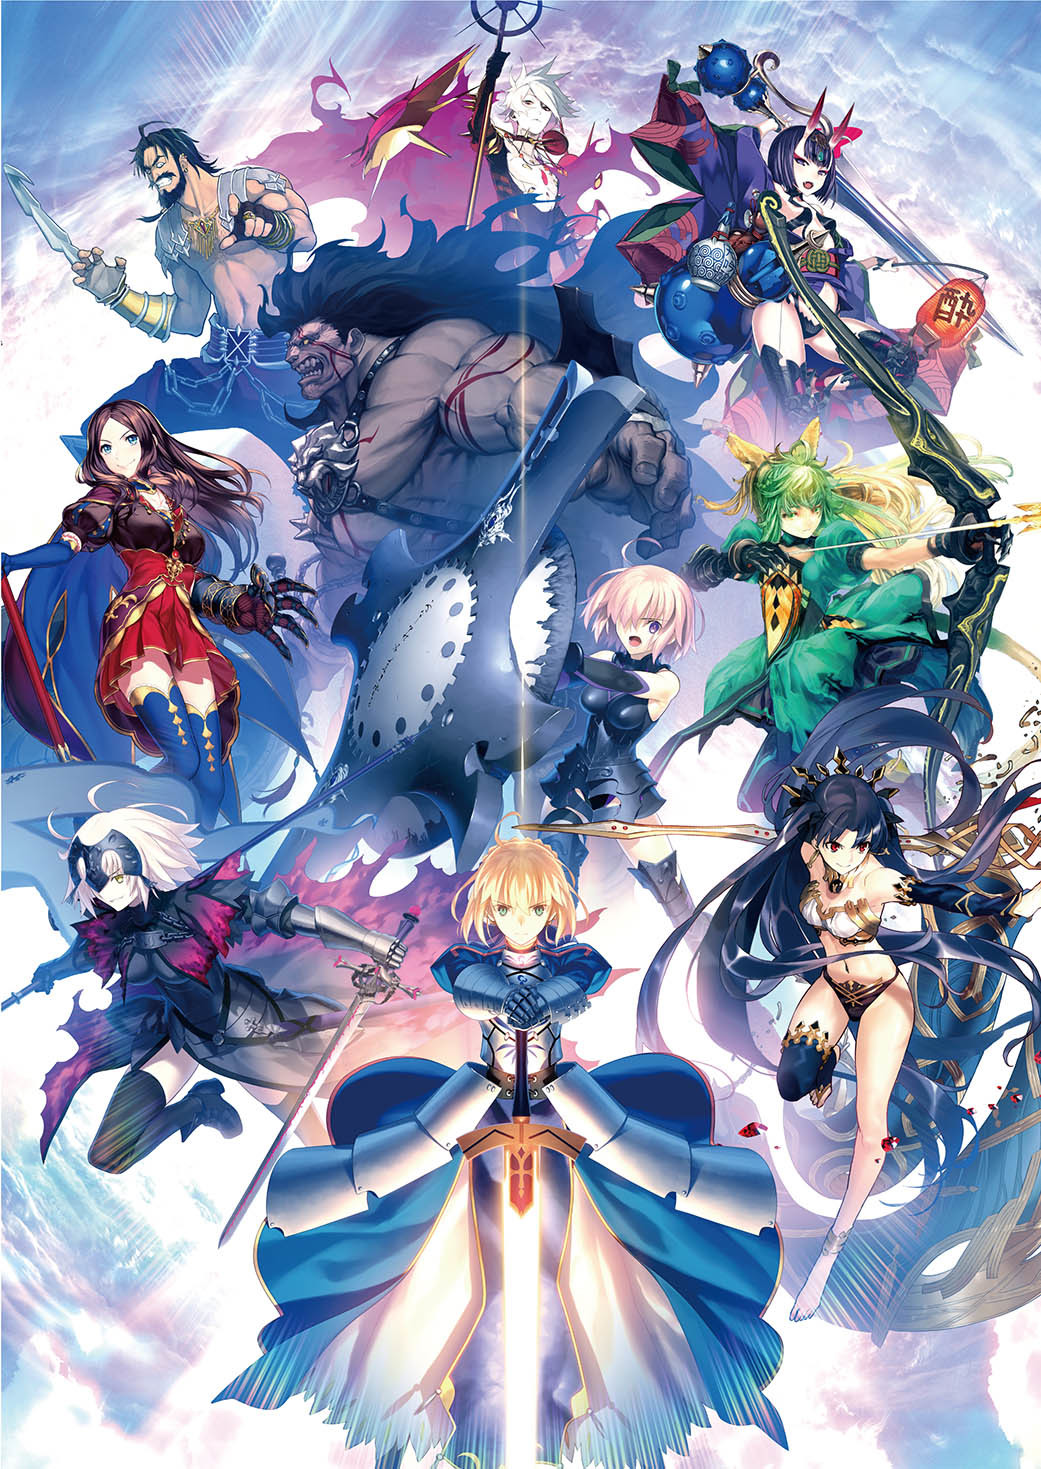 『Fate/Grand Order Arcade』キービジュアル (c)TYPE-MOON / FGO ARCADE PROJECT